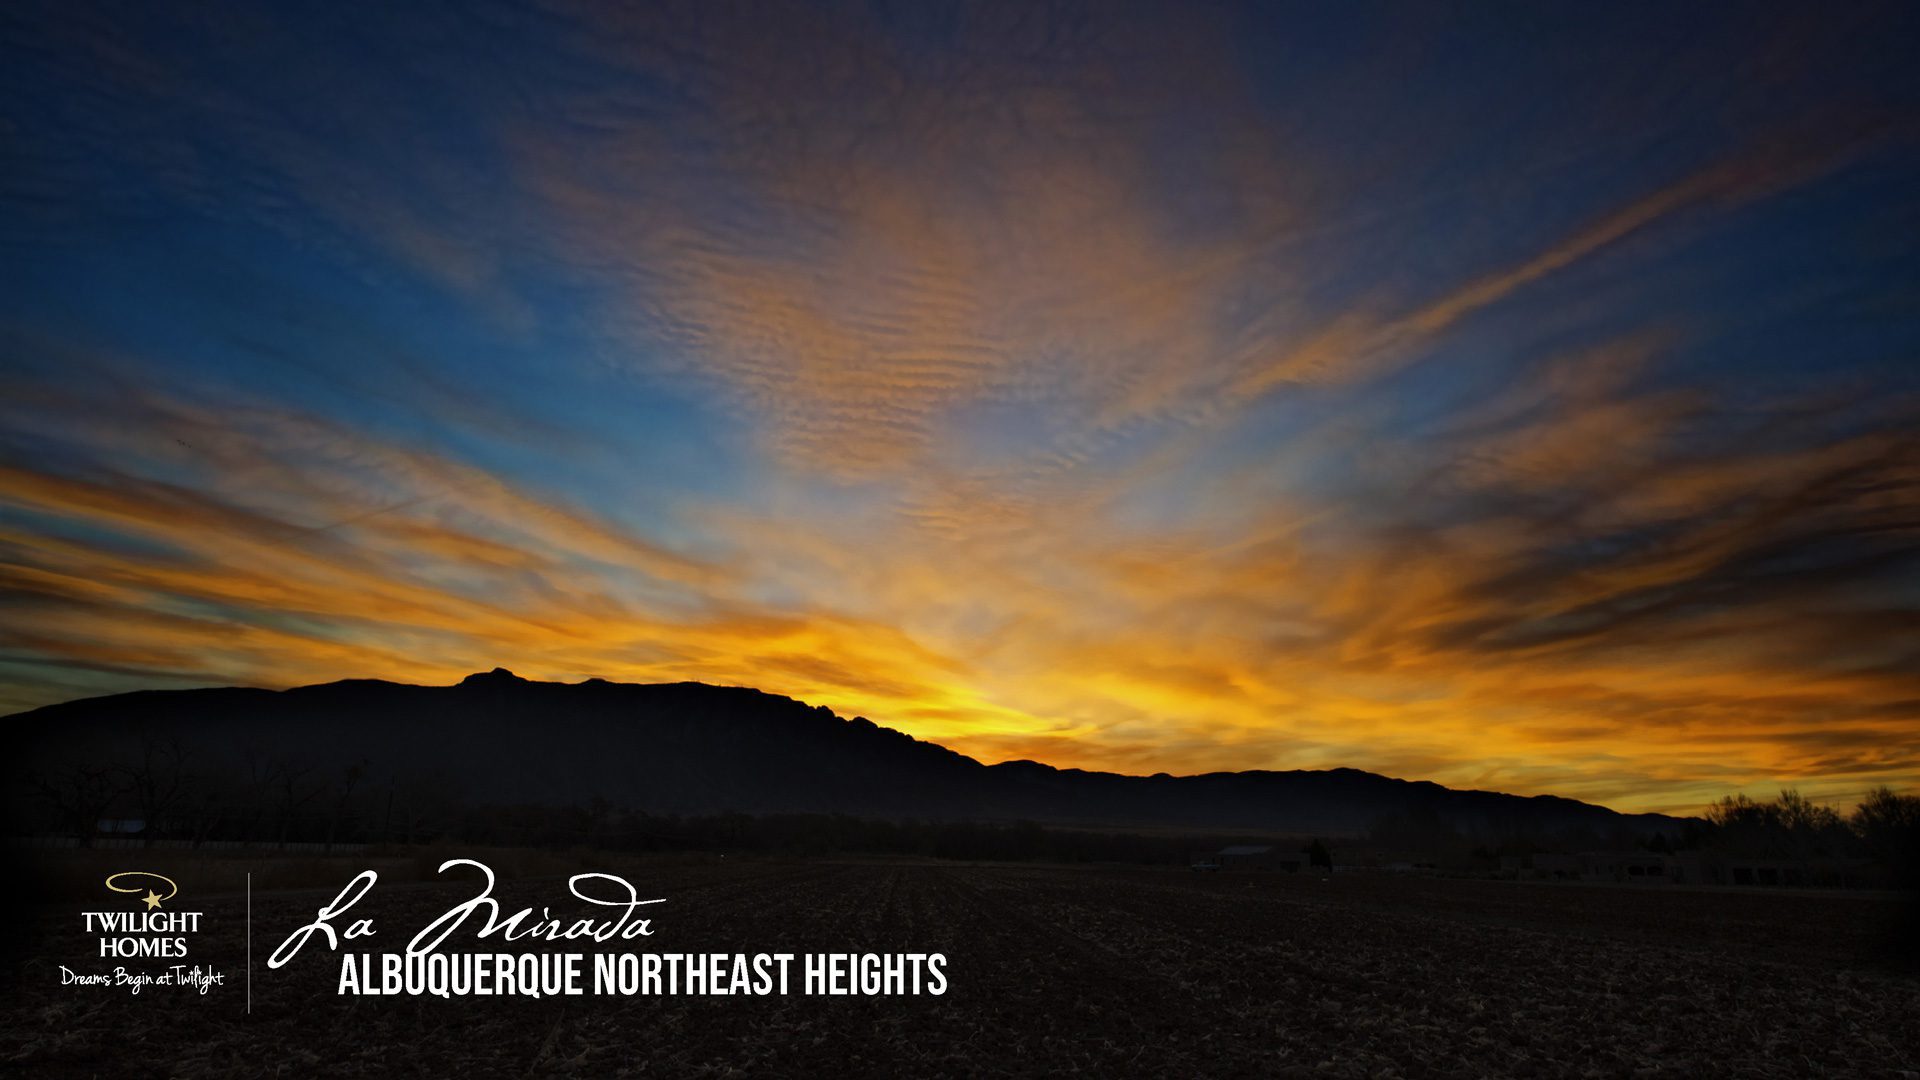 Twilight-Homes-_-La-Mirada---Albuquerque-NE-Heights